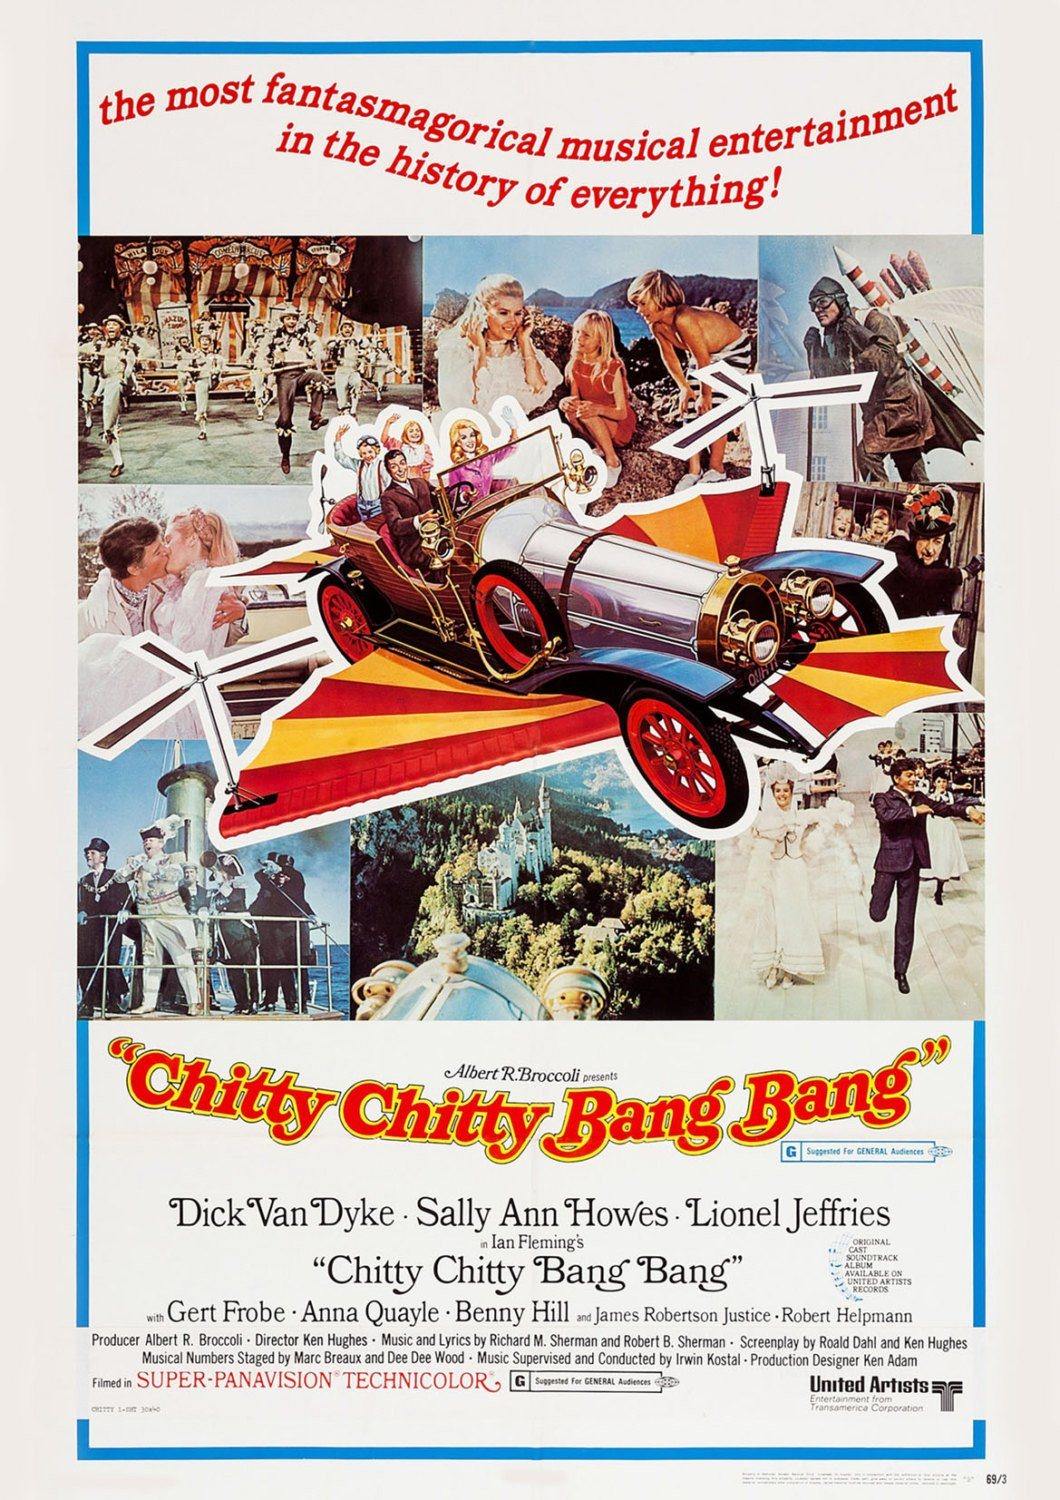 CHITTY BANG BANG Poster: Classic Flying Car Family Film Art Reprint - Pimlico Prints